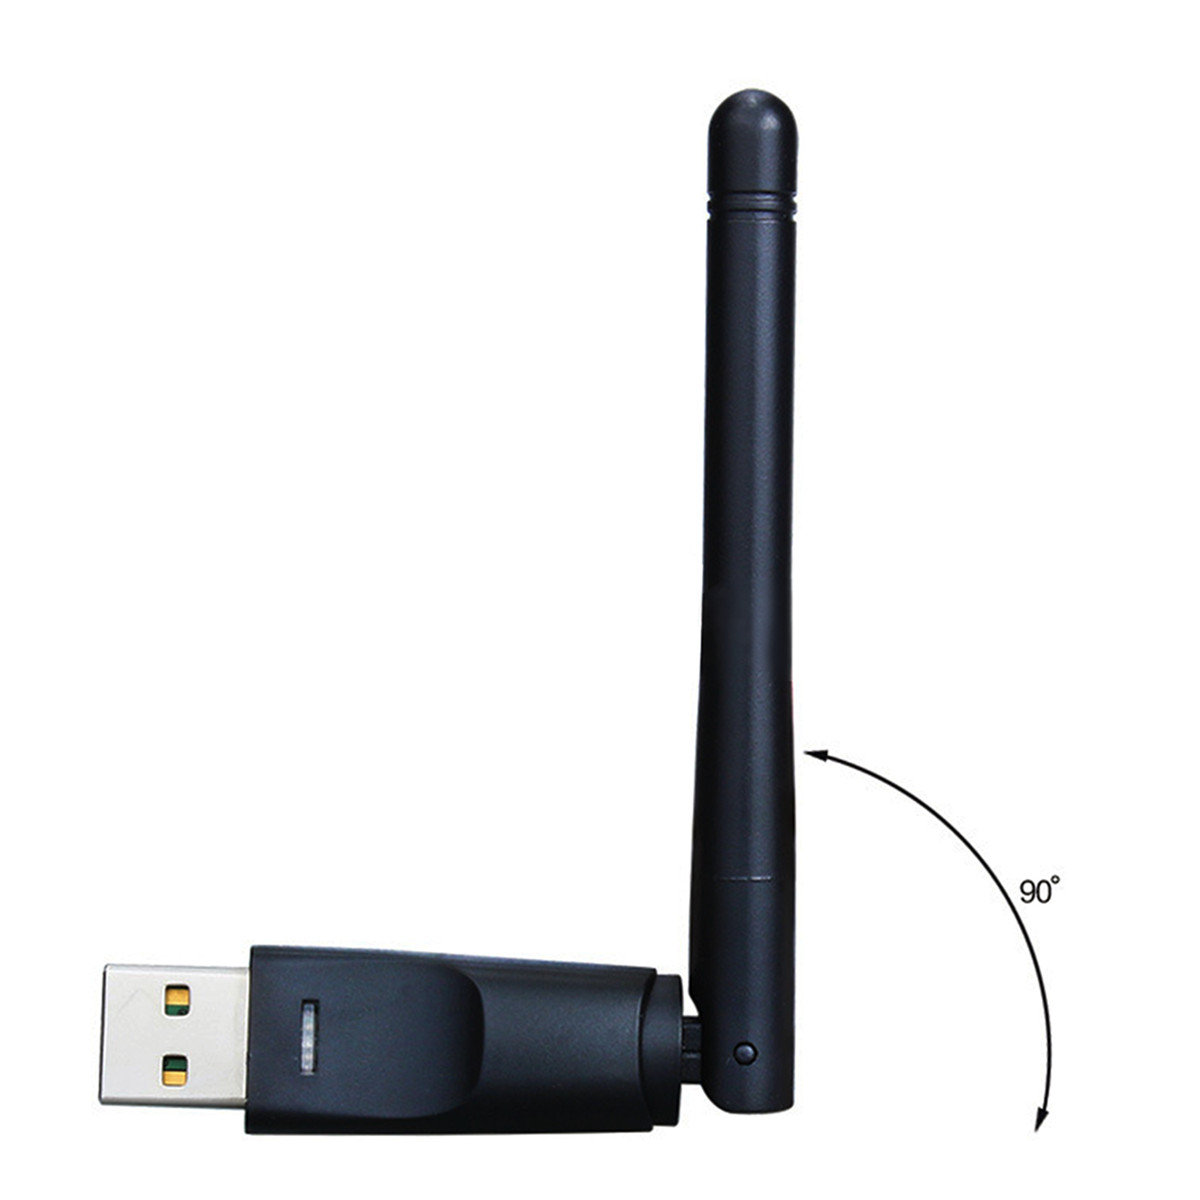 Wireless Adapter For Mac